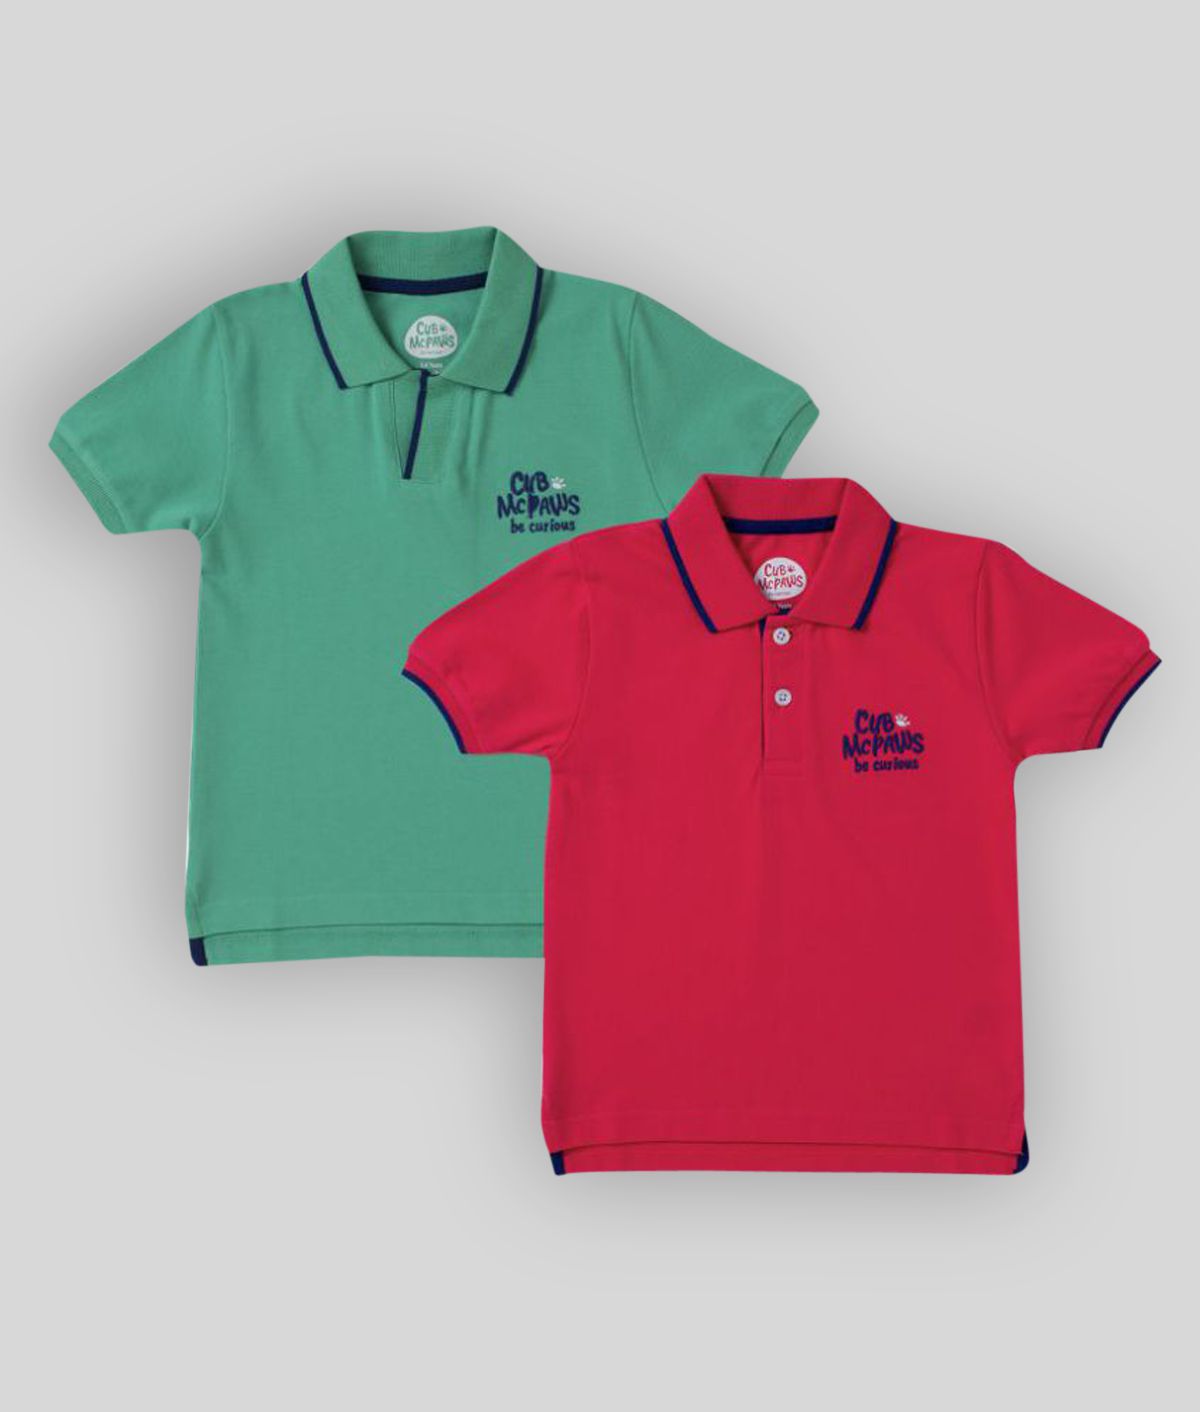 Cub Mcpaws - Multi Color Cotton Boy's Polo T-Shirt ( Pack of 2 )